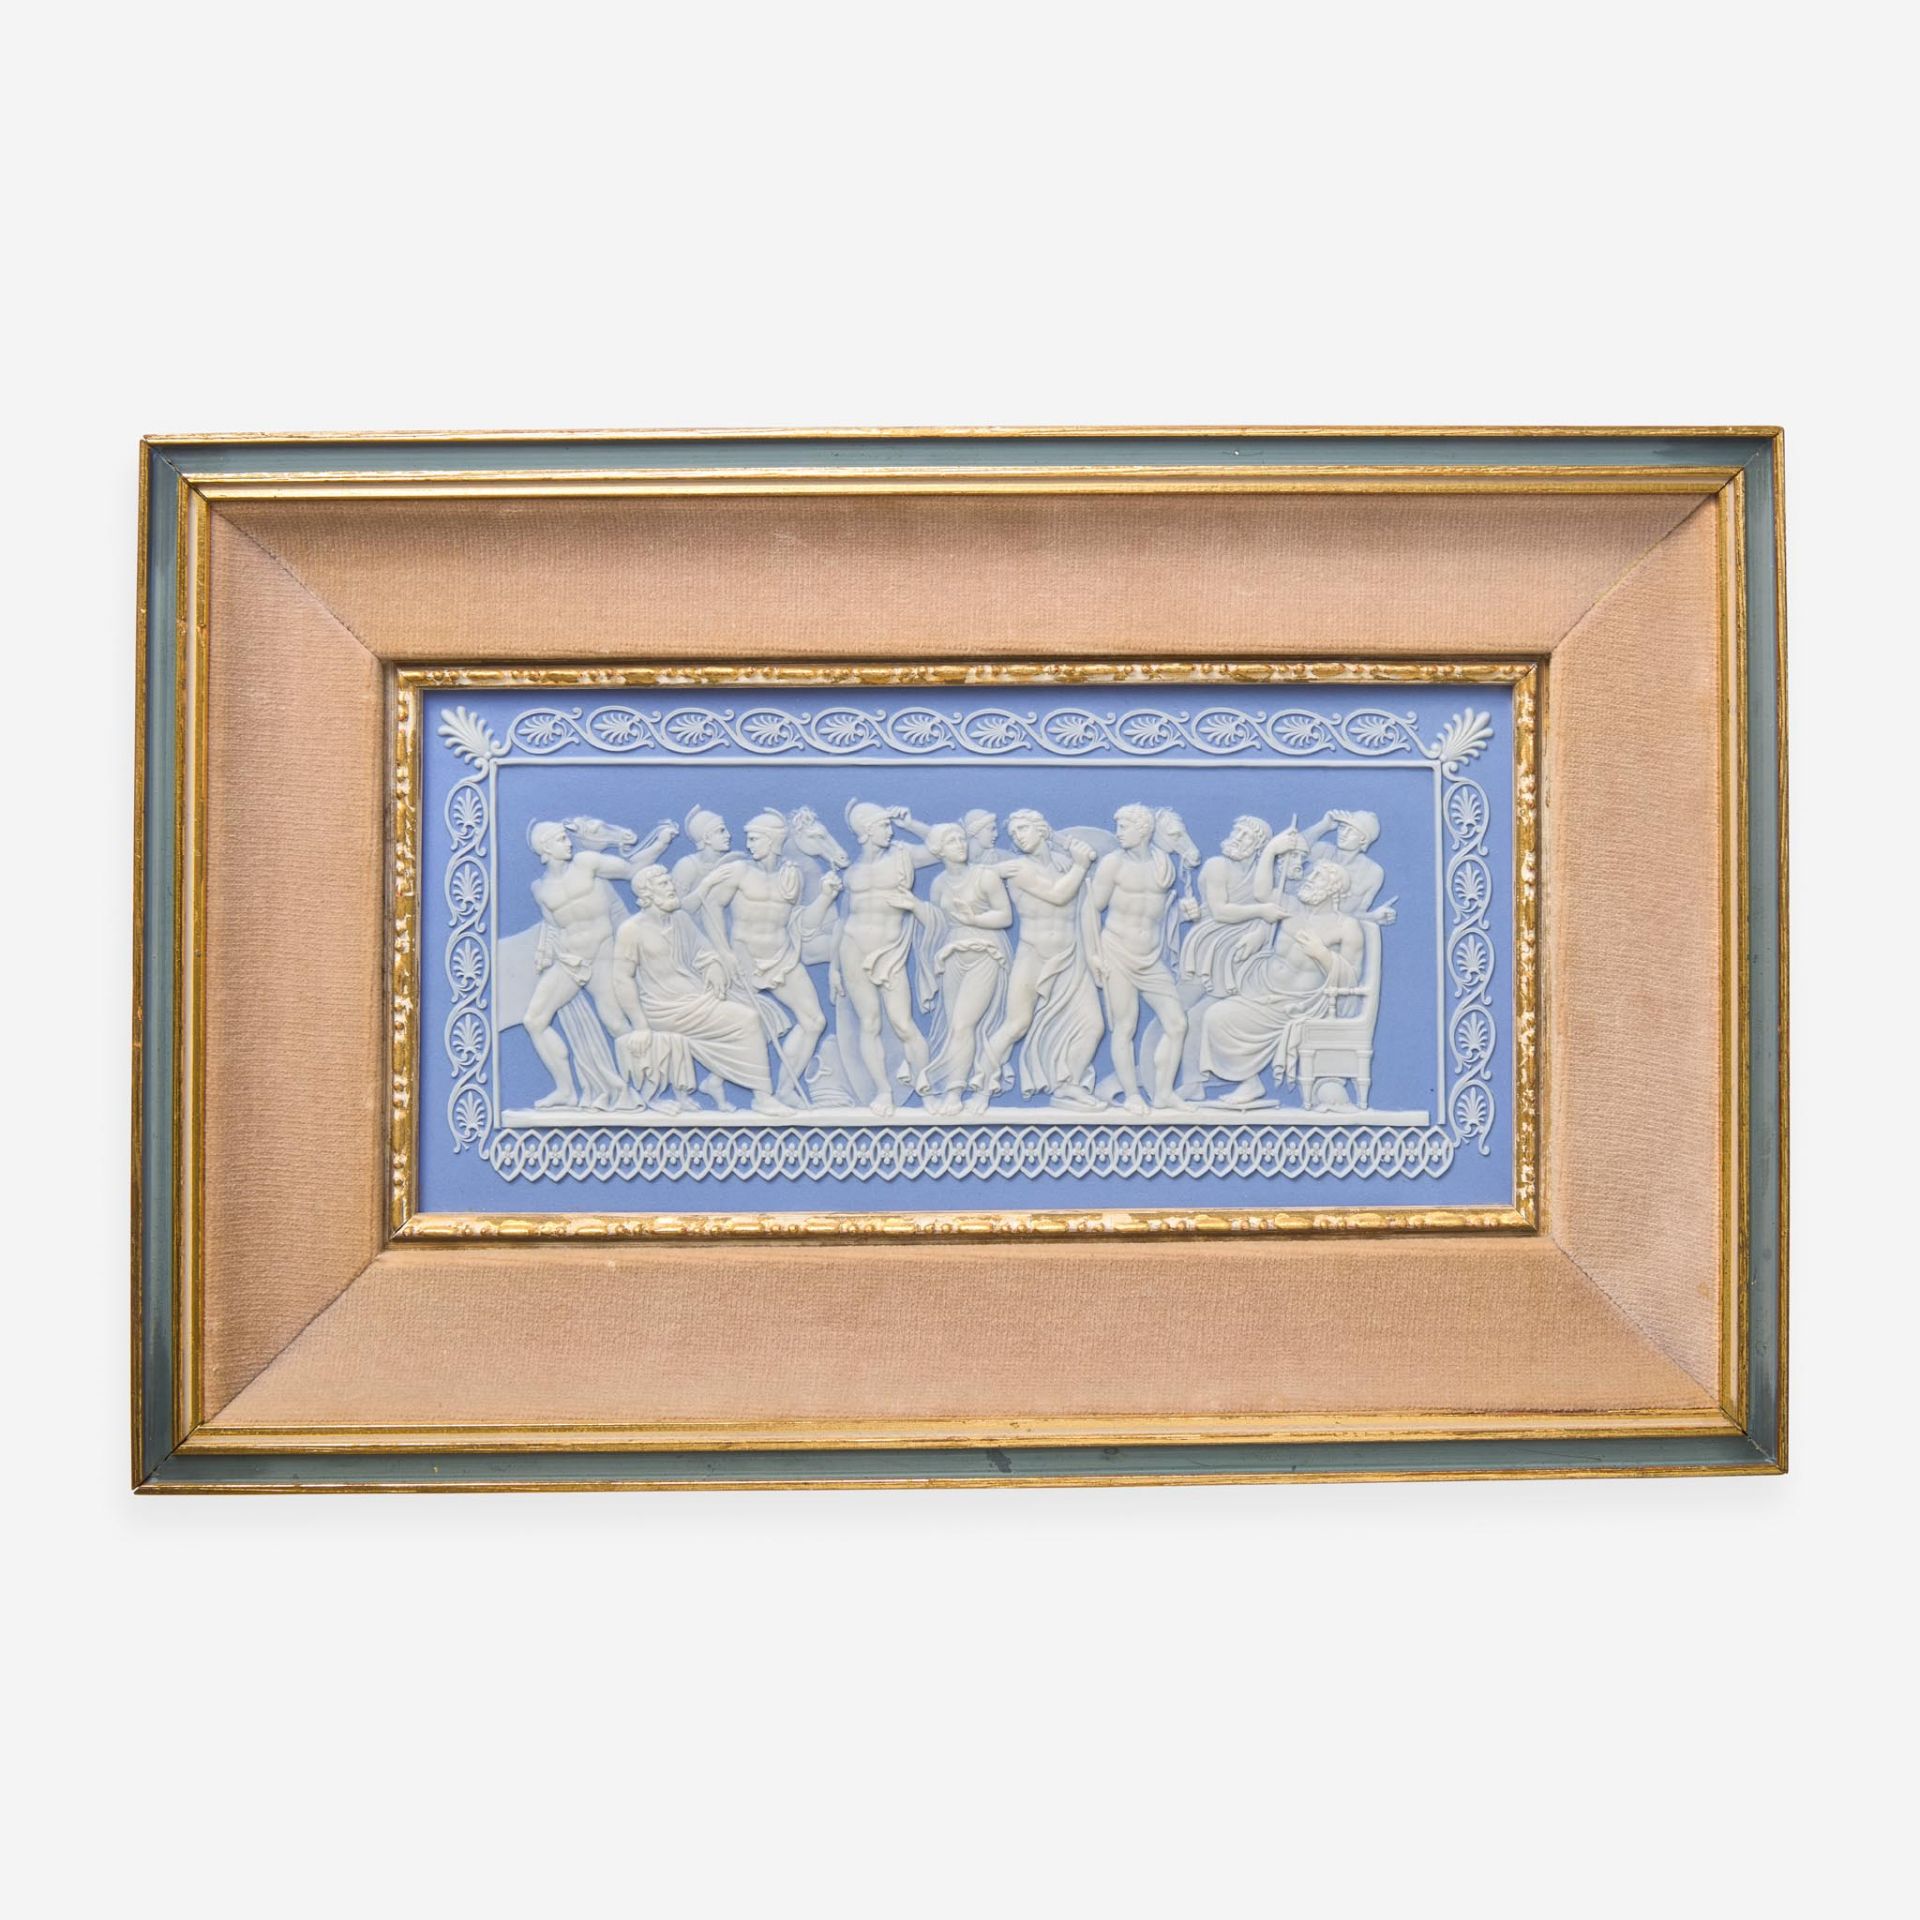 A Wedgwood Solid Light Blue Jasperware "Achilles at Scyros" Plaque UK, circa 1800